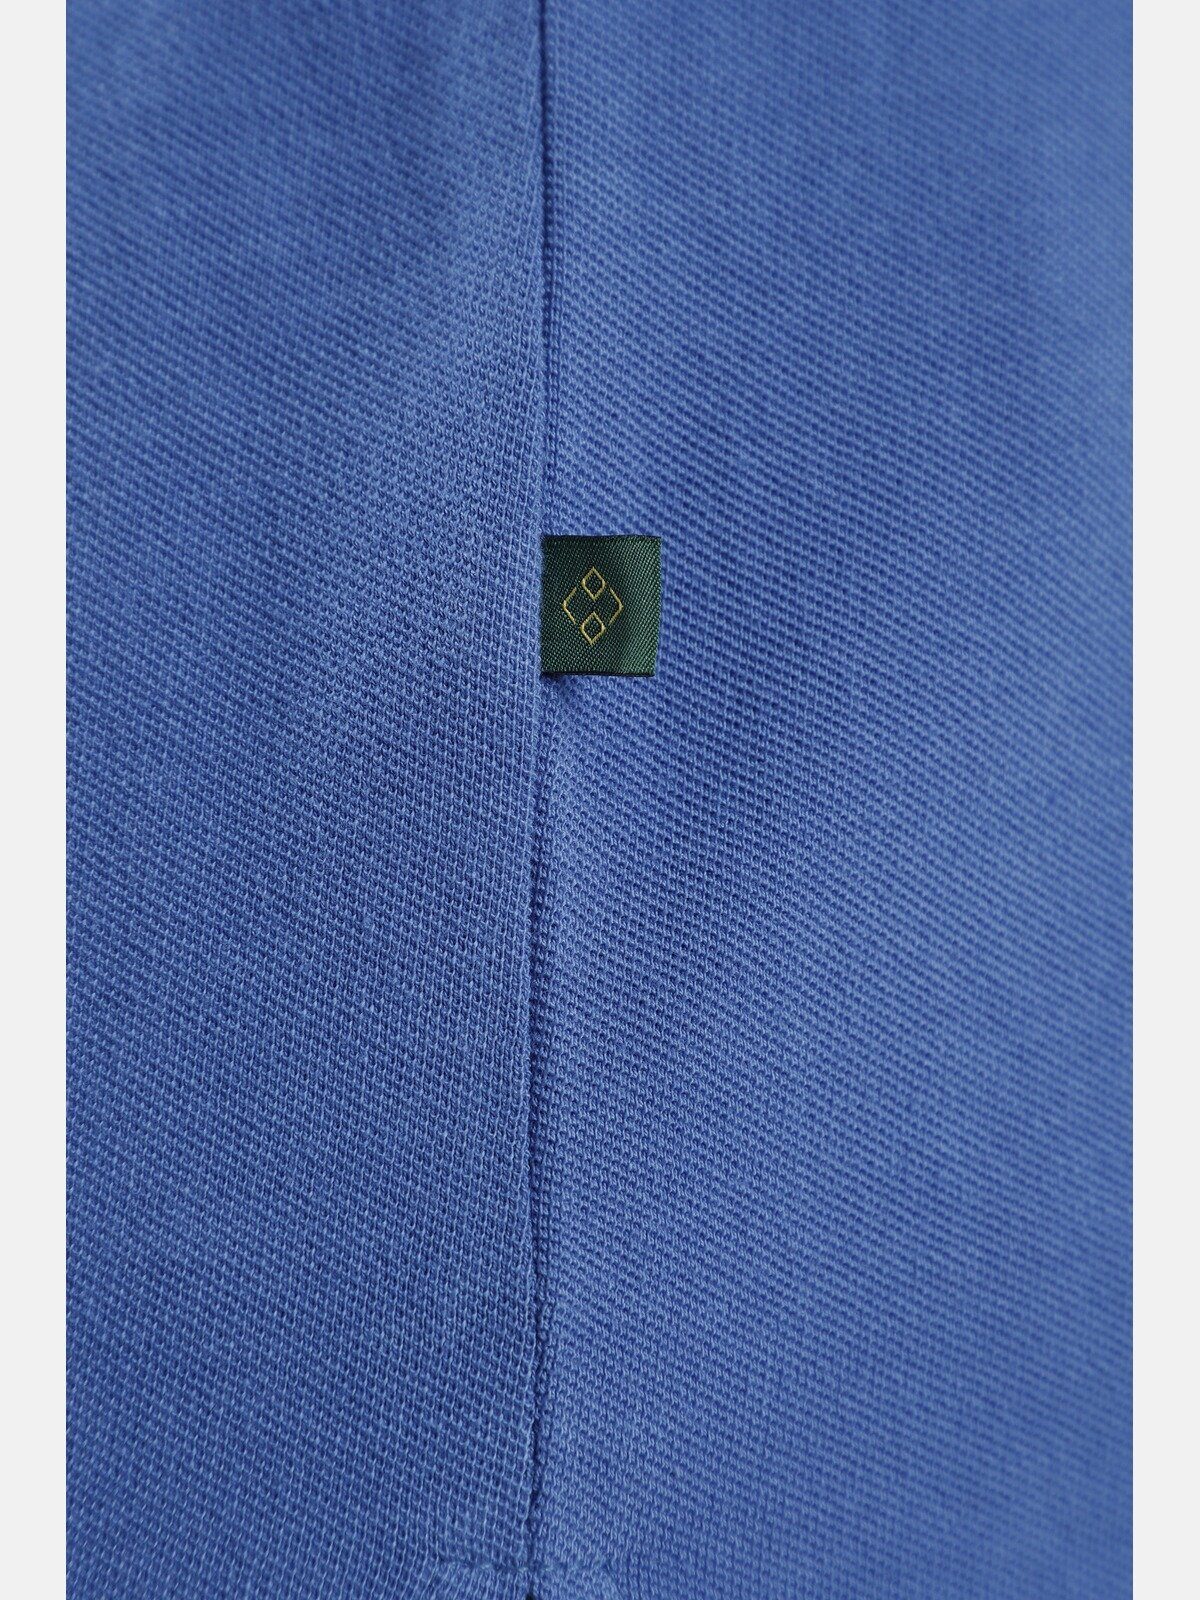 Kragen EARL doppeltem mit blau Colby Langarm-Poloshirt Charles CHAD